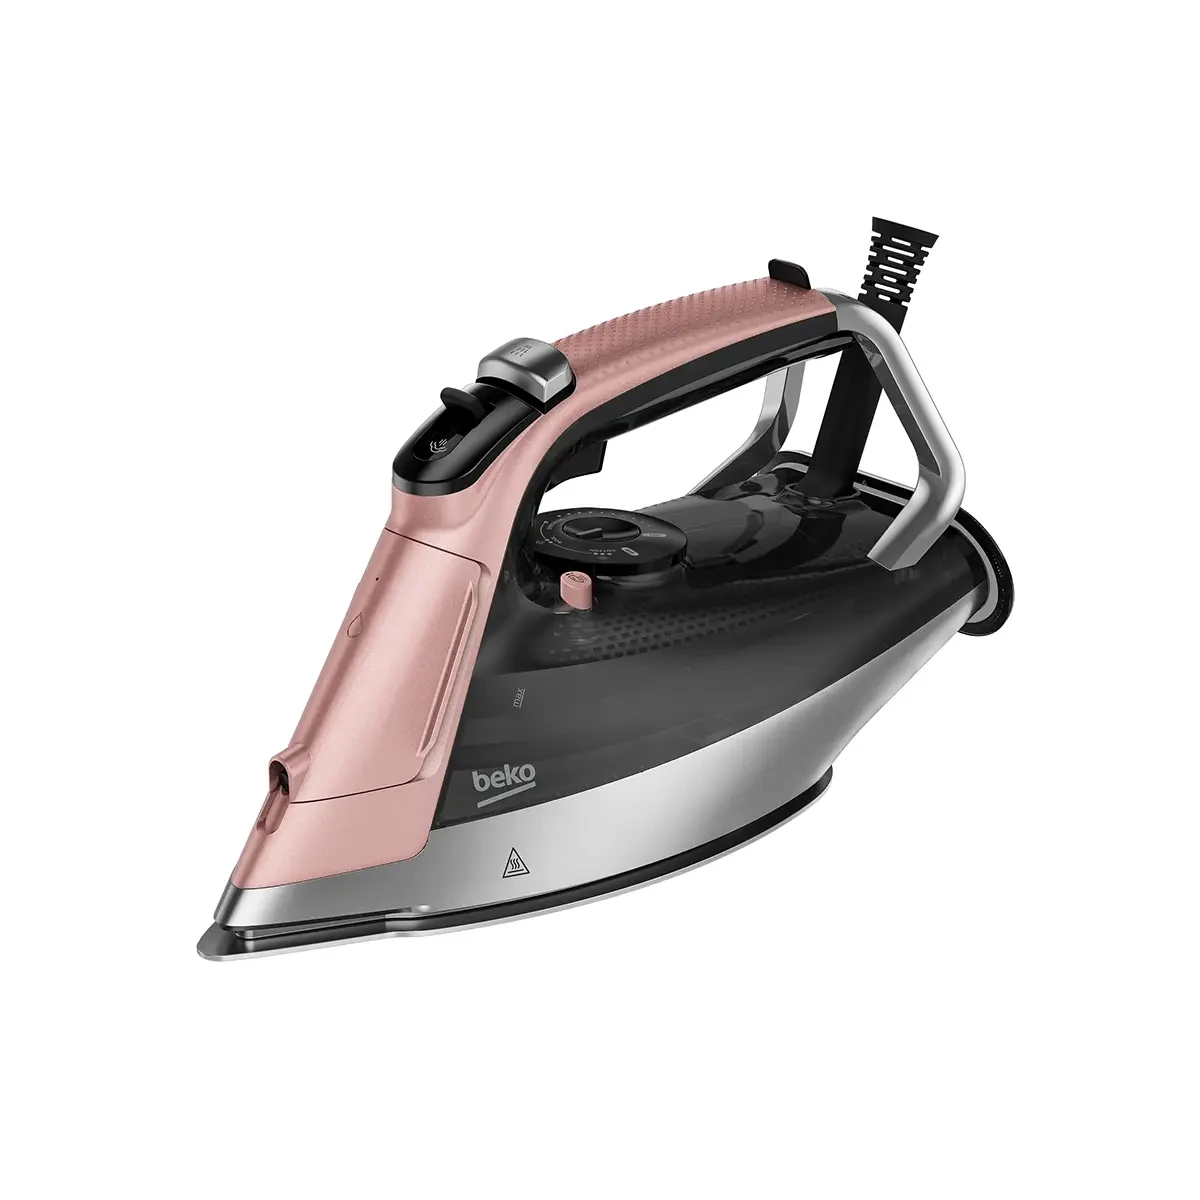 Beko Steam Iron – Pink – 3000 Watt – SoftGlide soleplate technology –  Self clean Anti-Calc system -Auto shut off